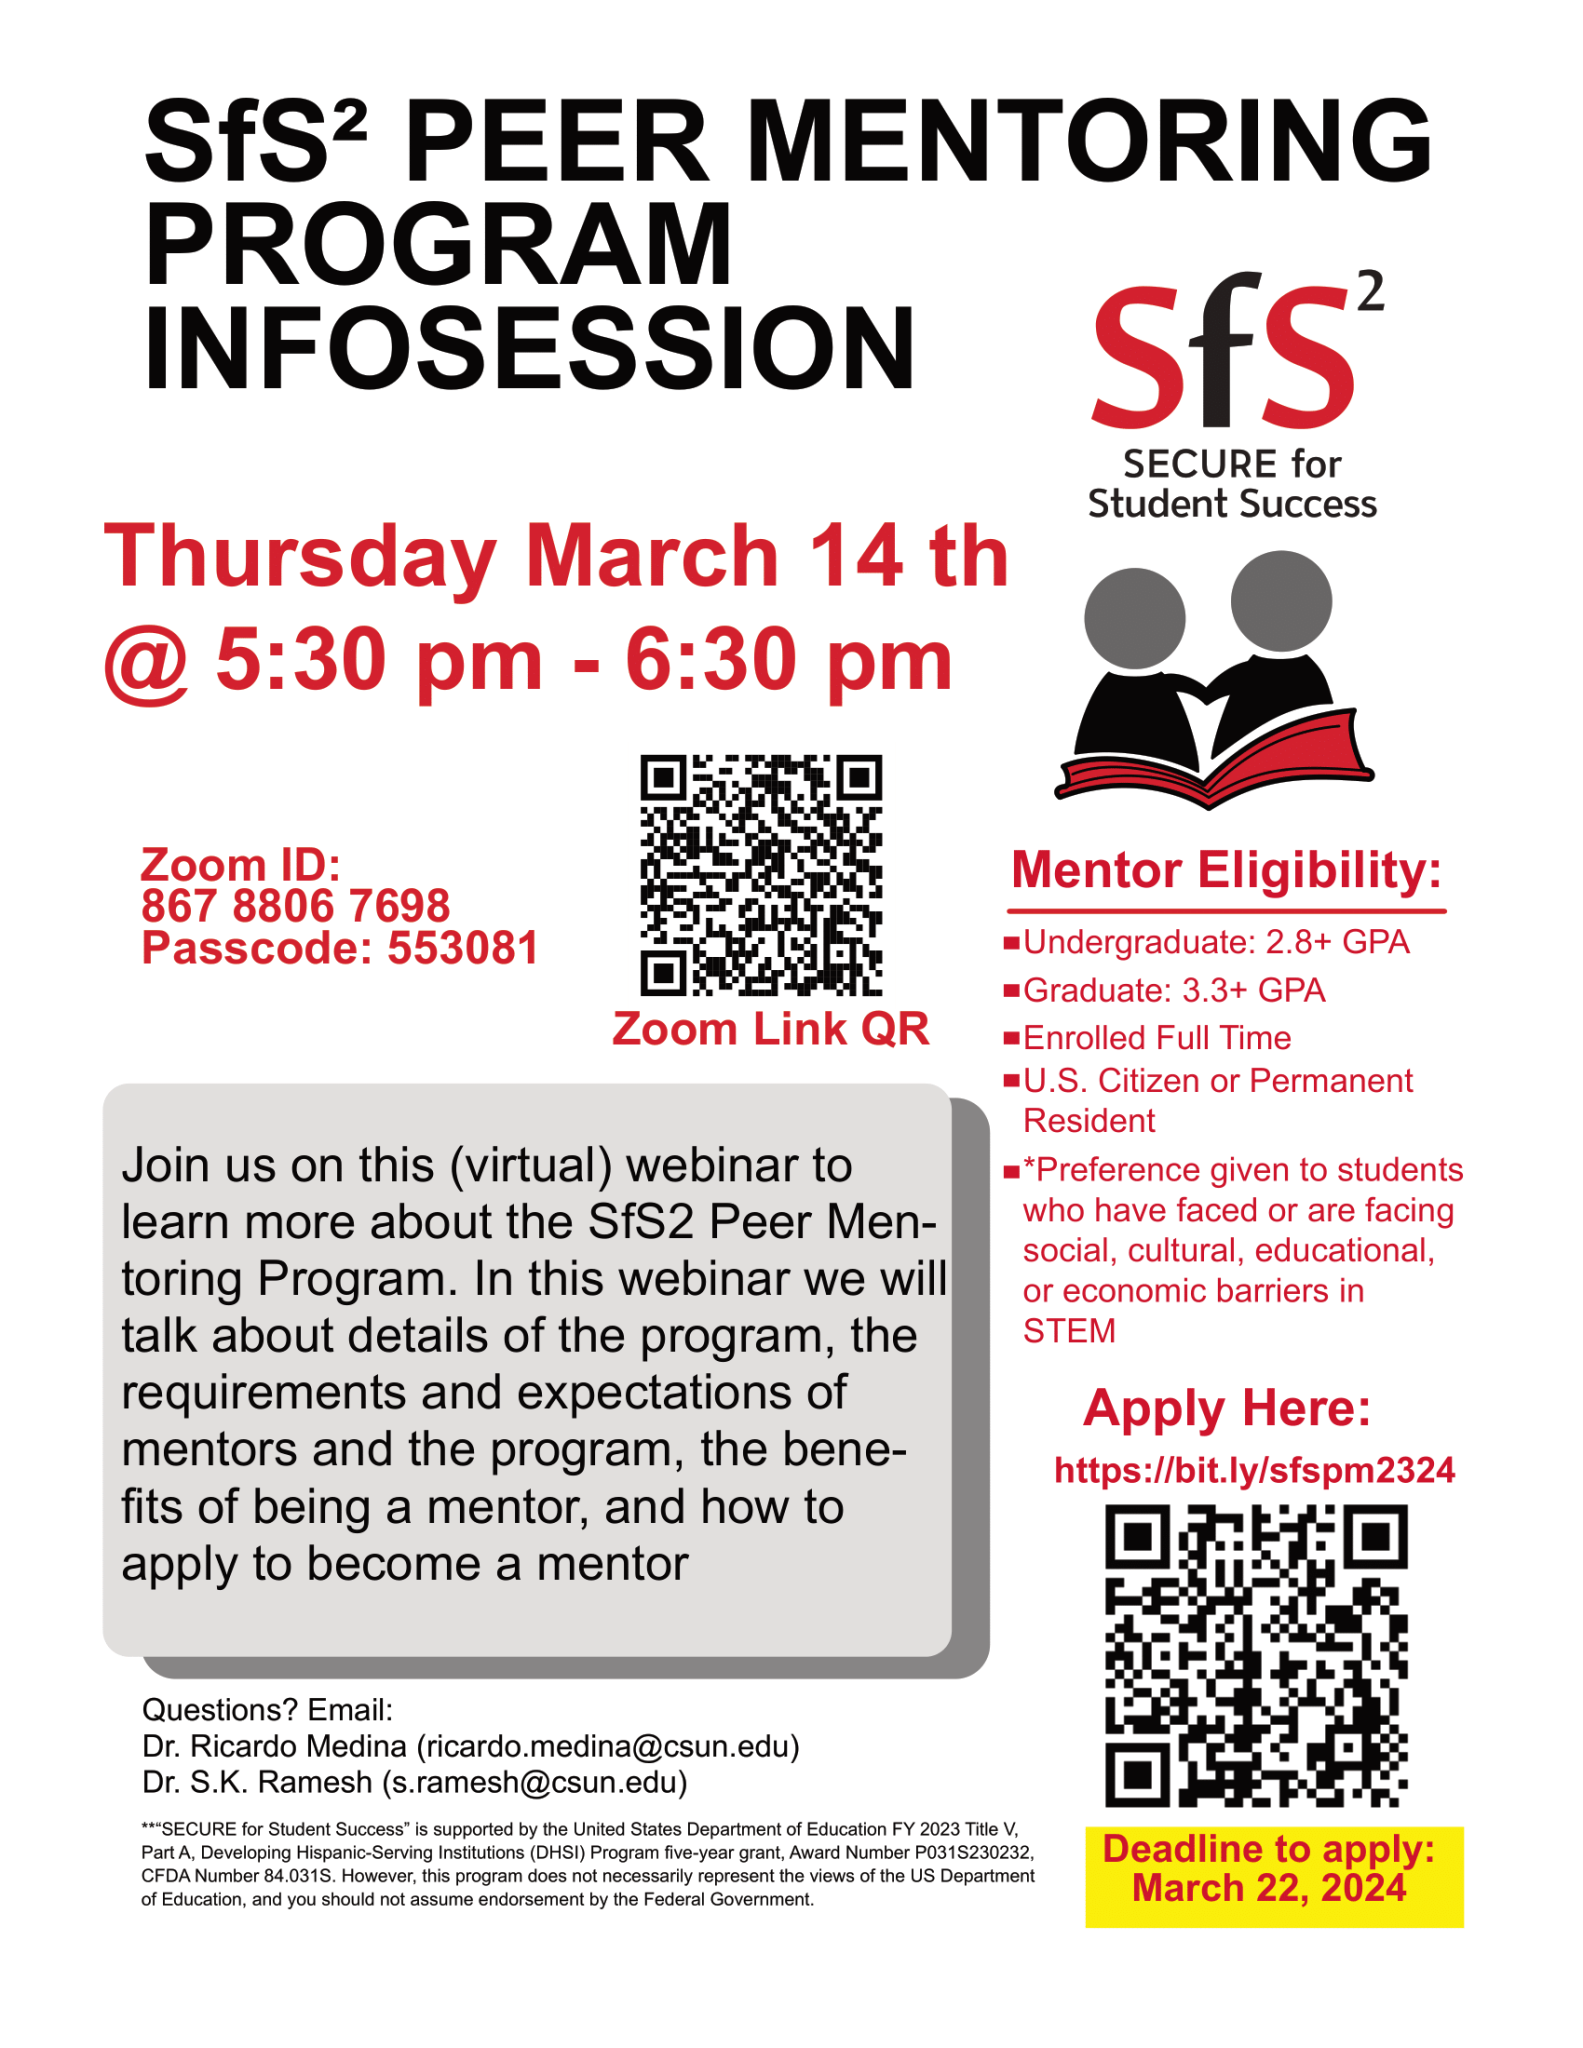 SFS2 Peer Mentoring Program Infosession